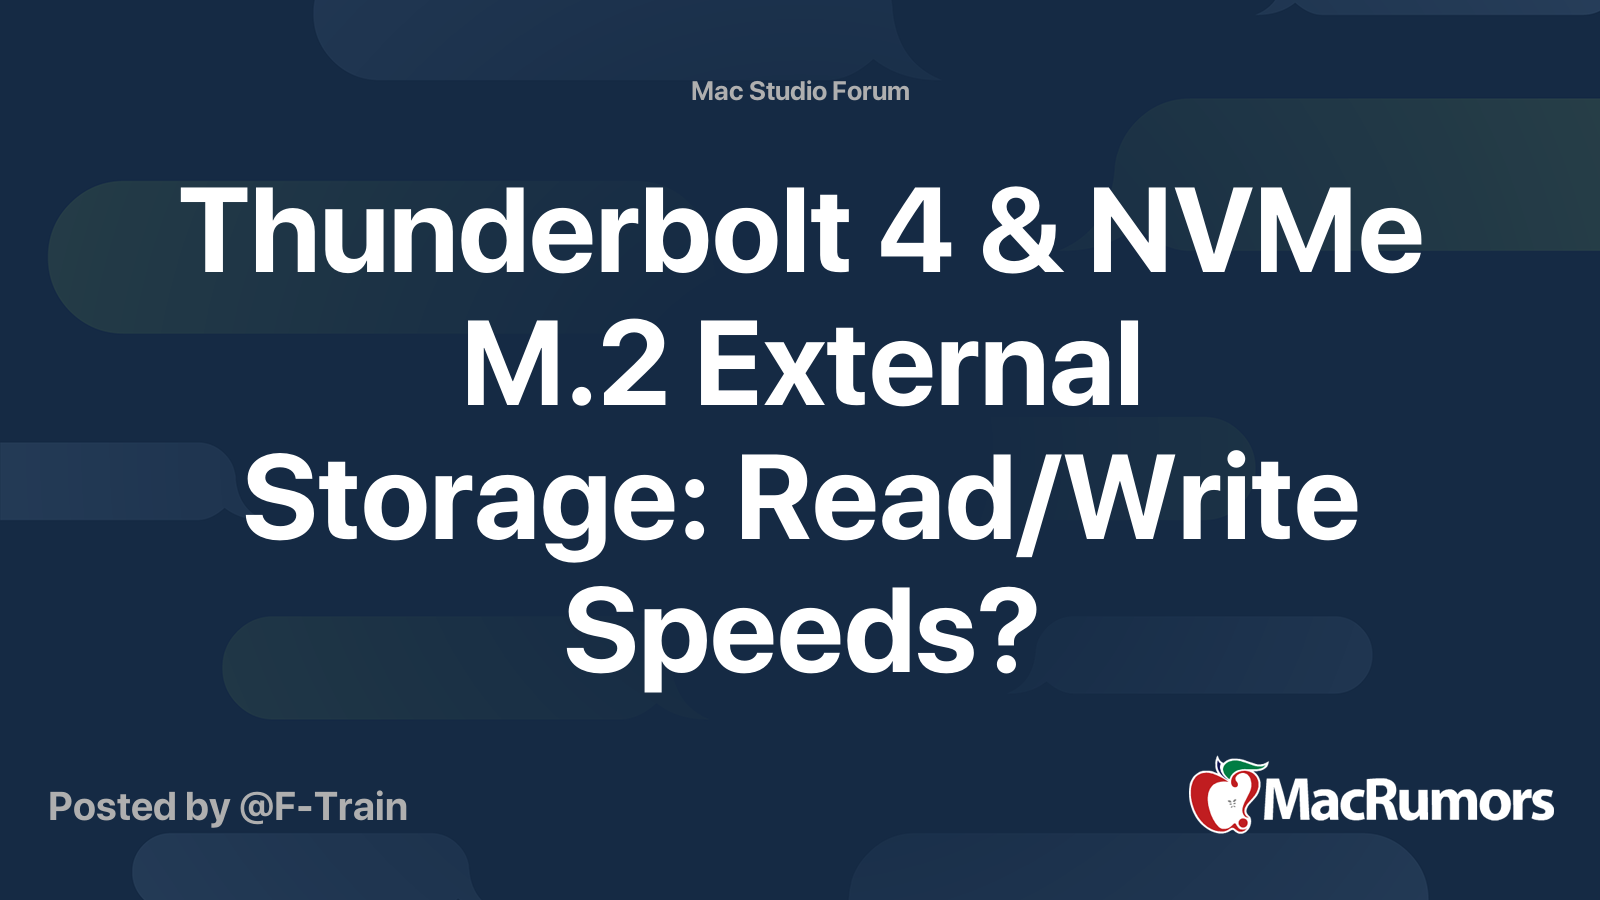 Thunderbolt 4 & NVMe M.2 External Storage: Read/Write Speeds